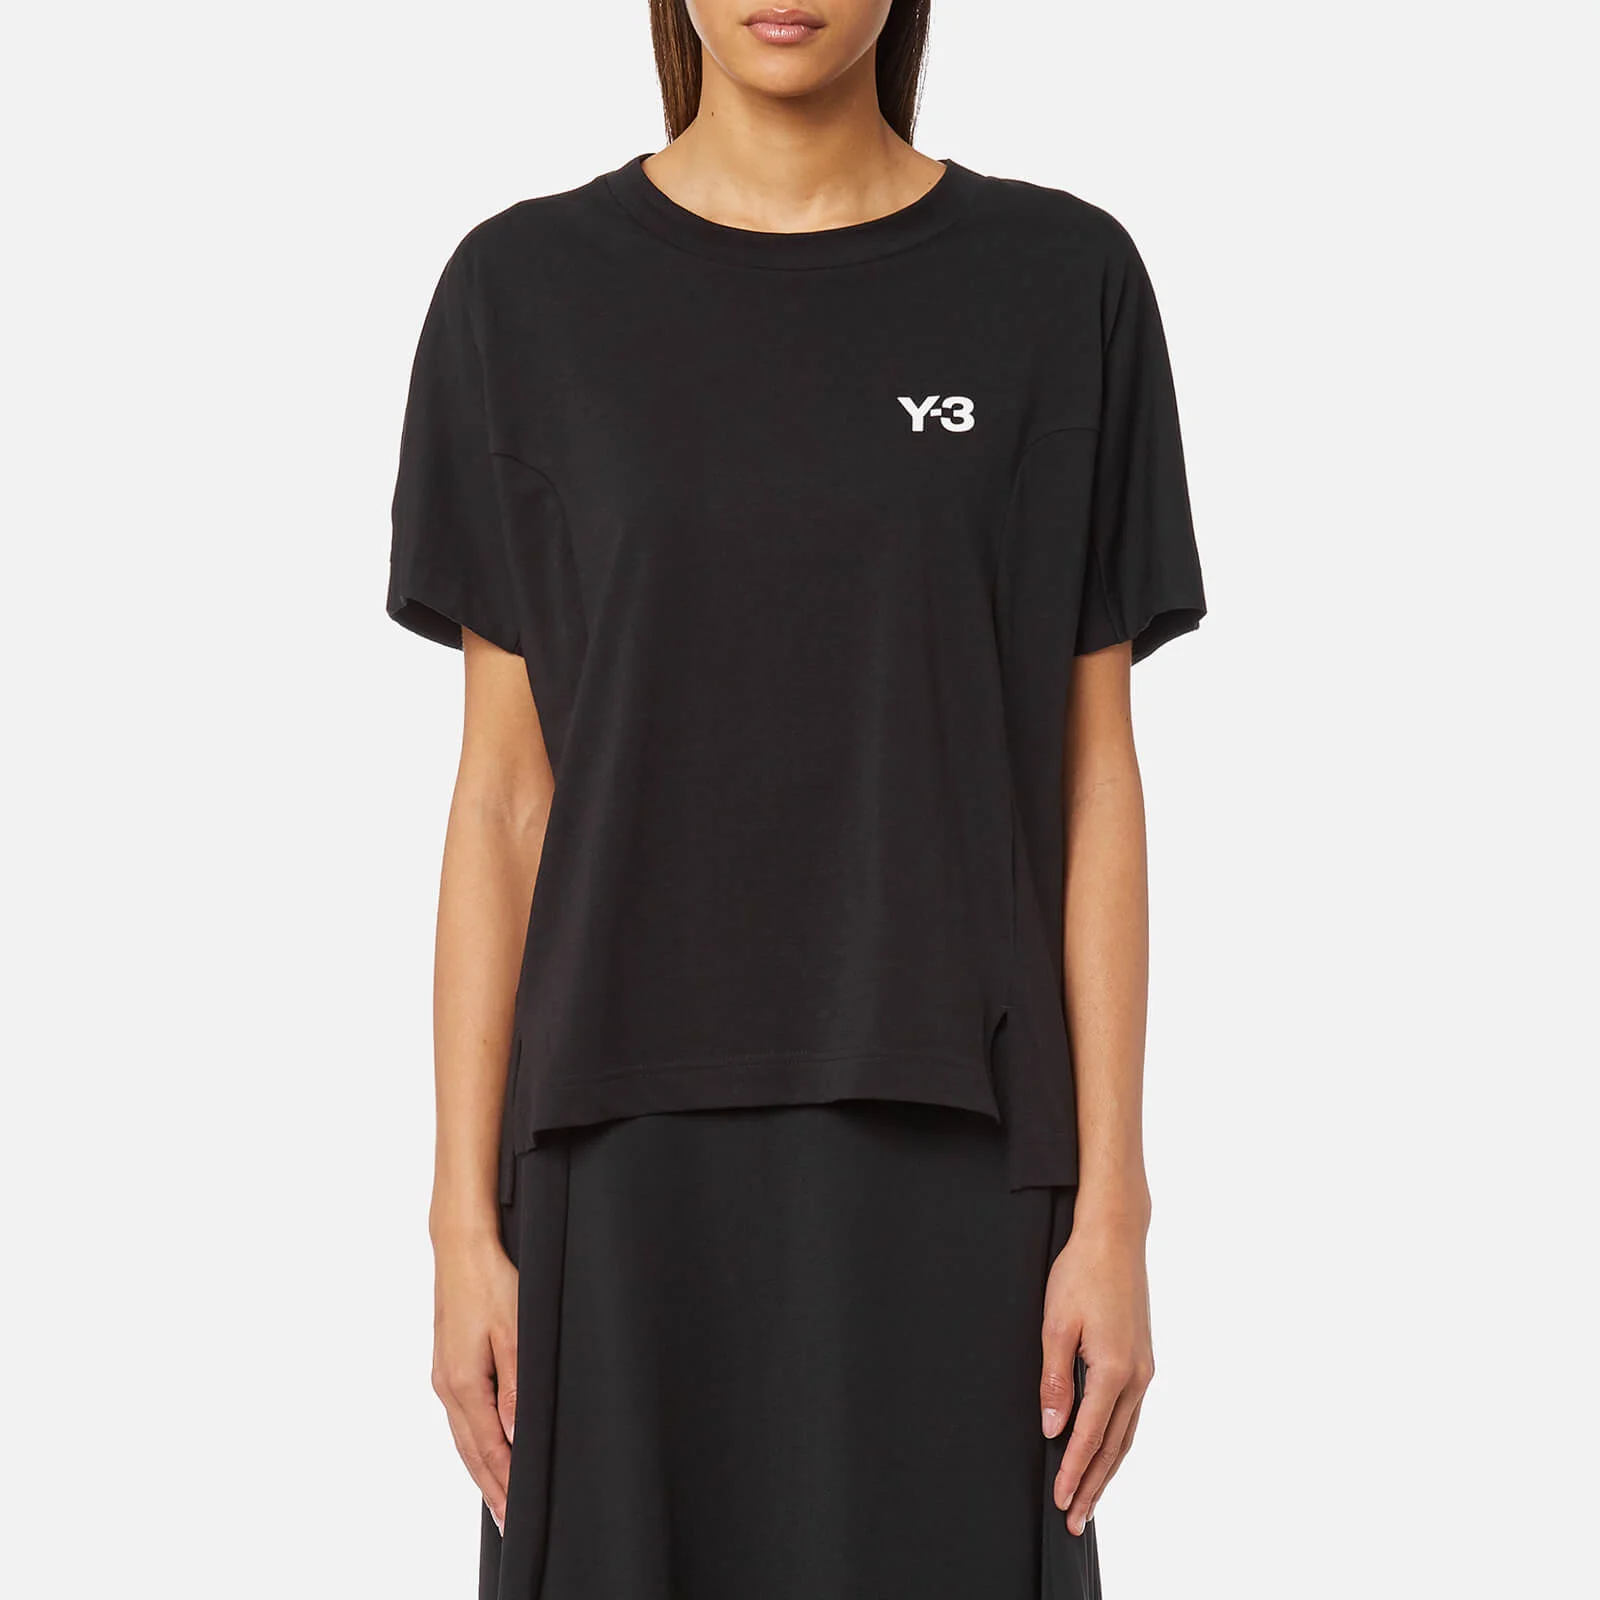 Y-3 Women's Short Sleeve Graphic T-Shirt - Black Image 1